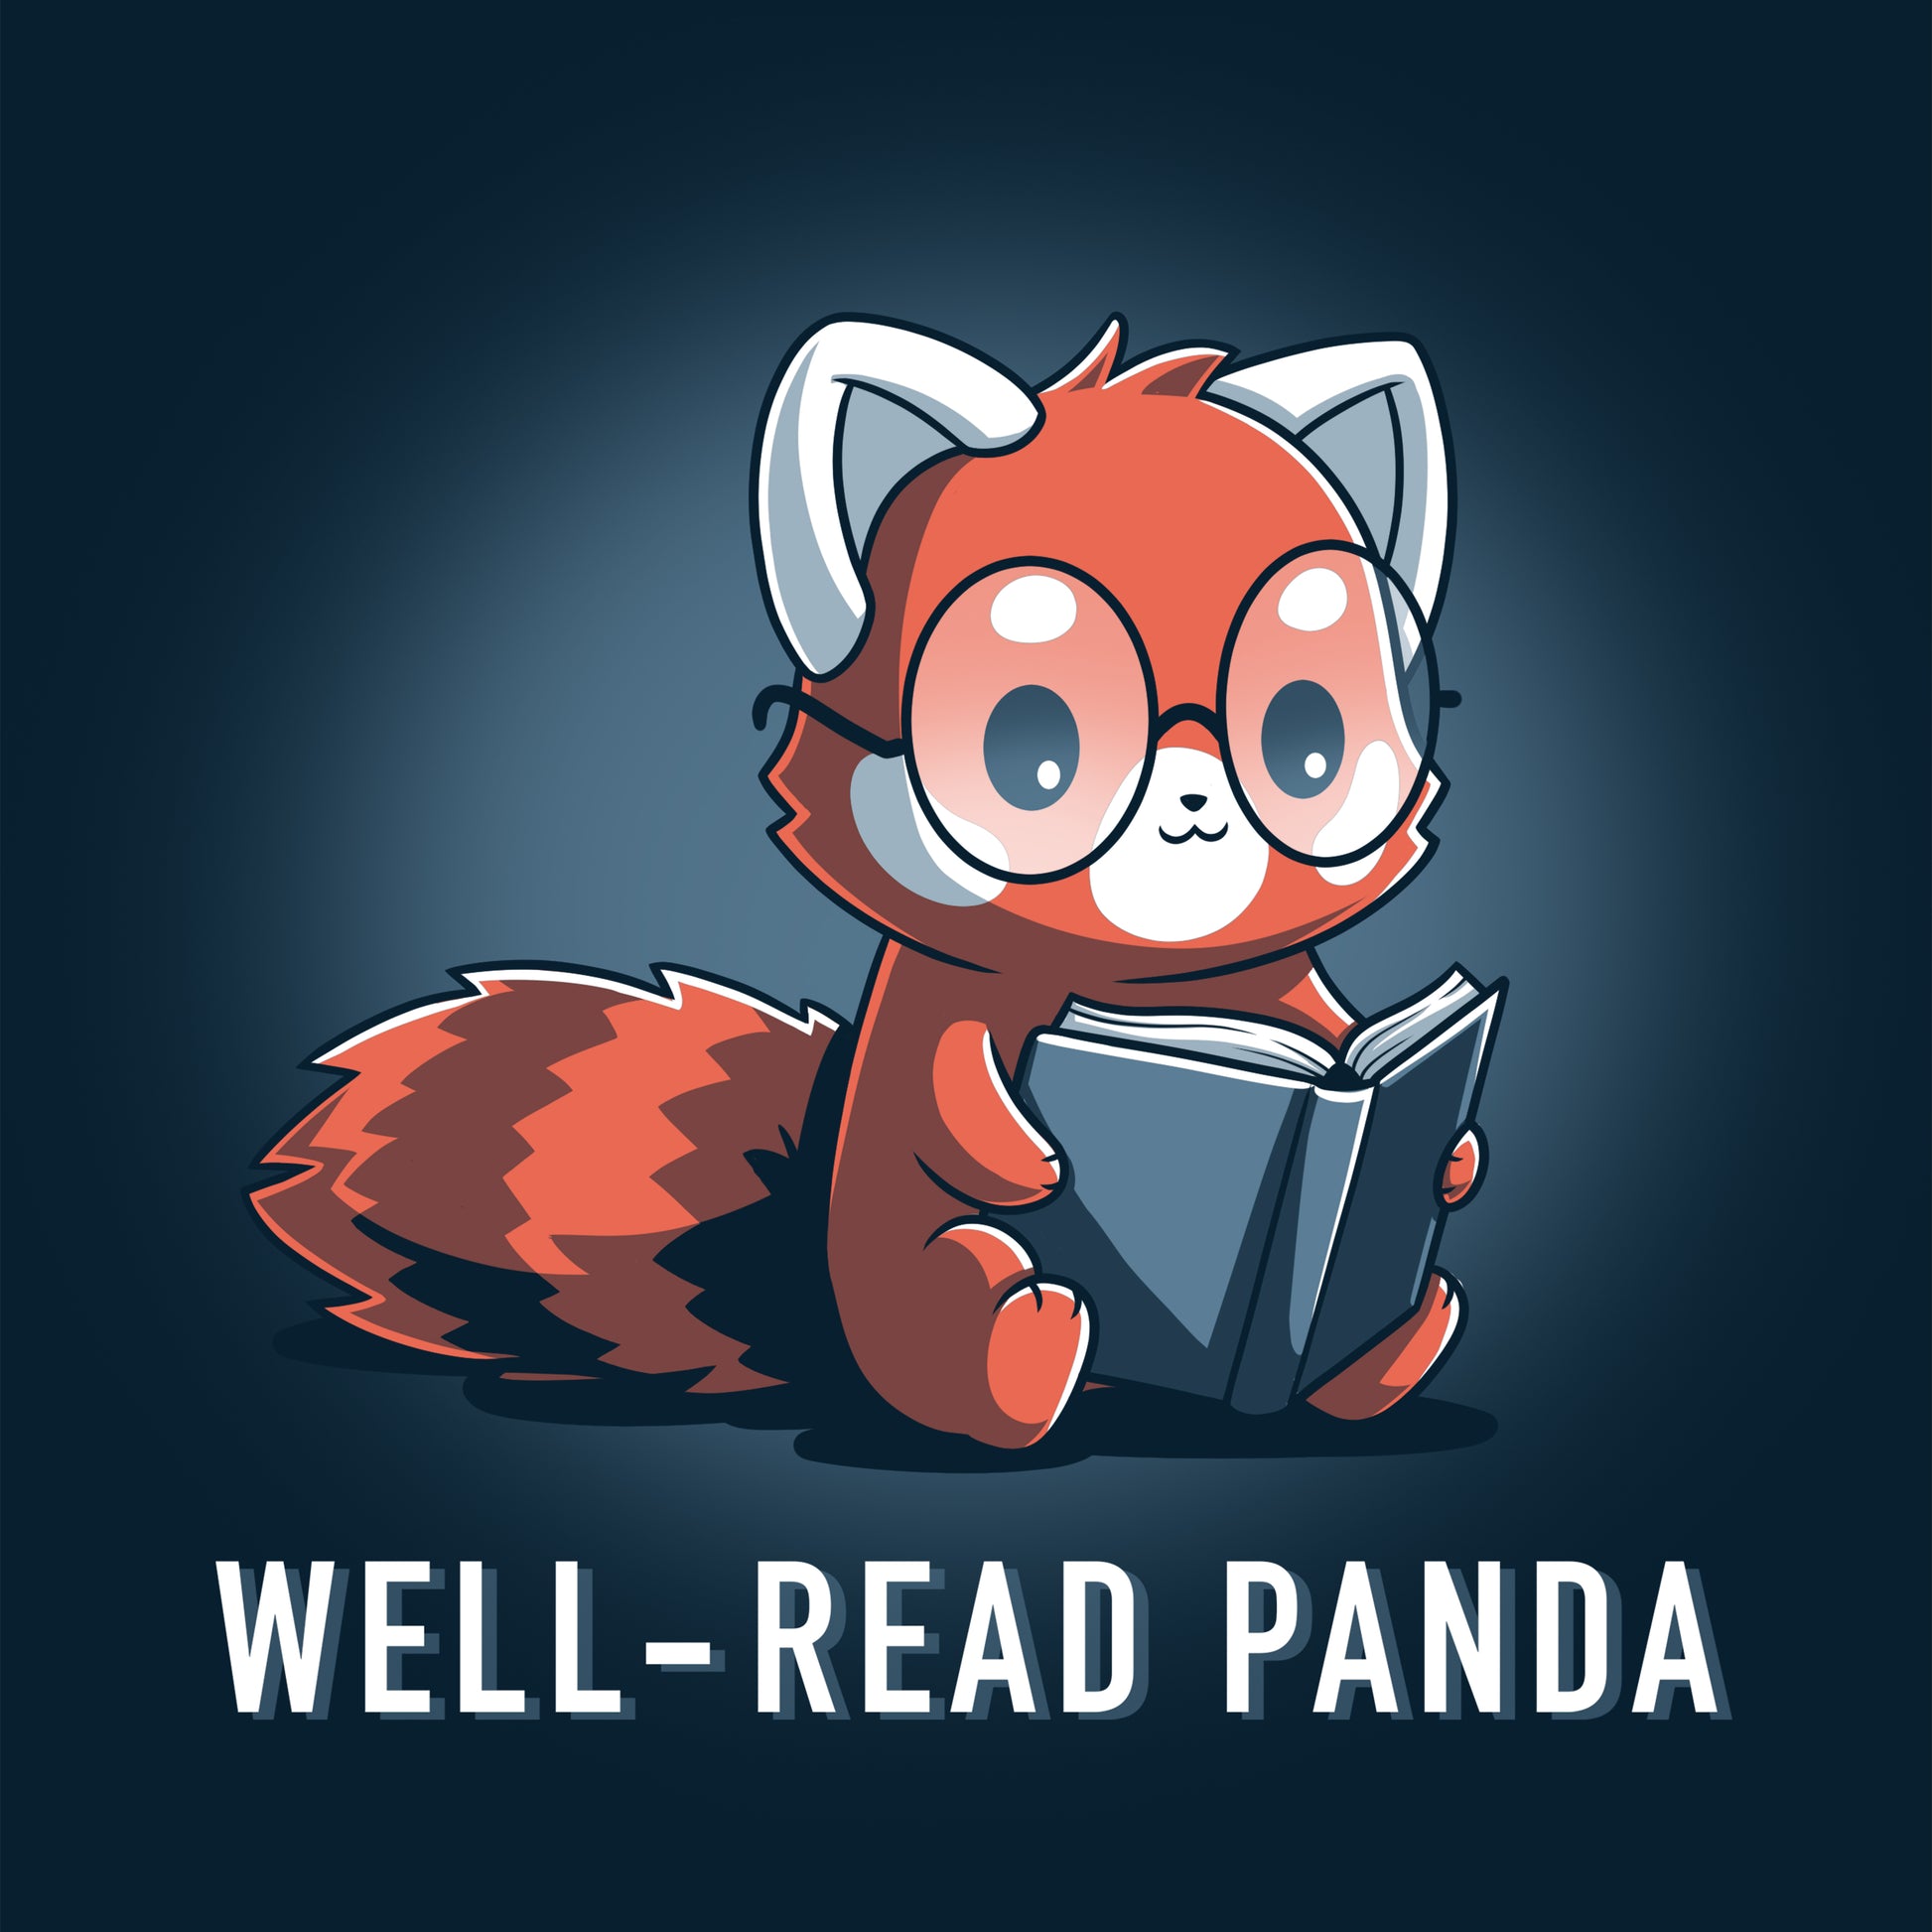 TeeTurtle's Well-Read Panda.